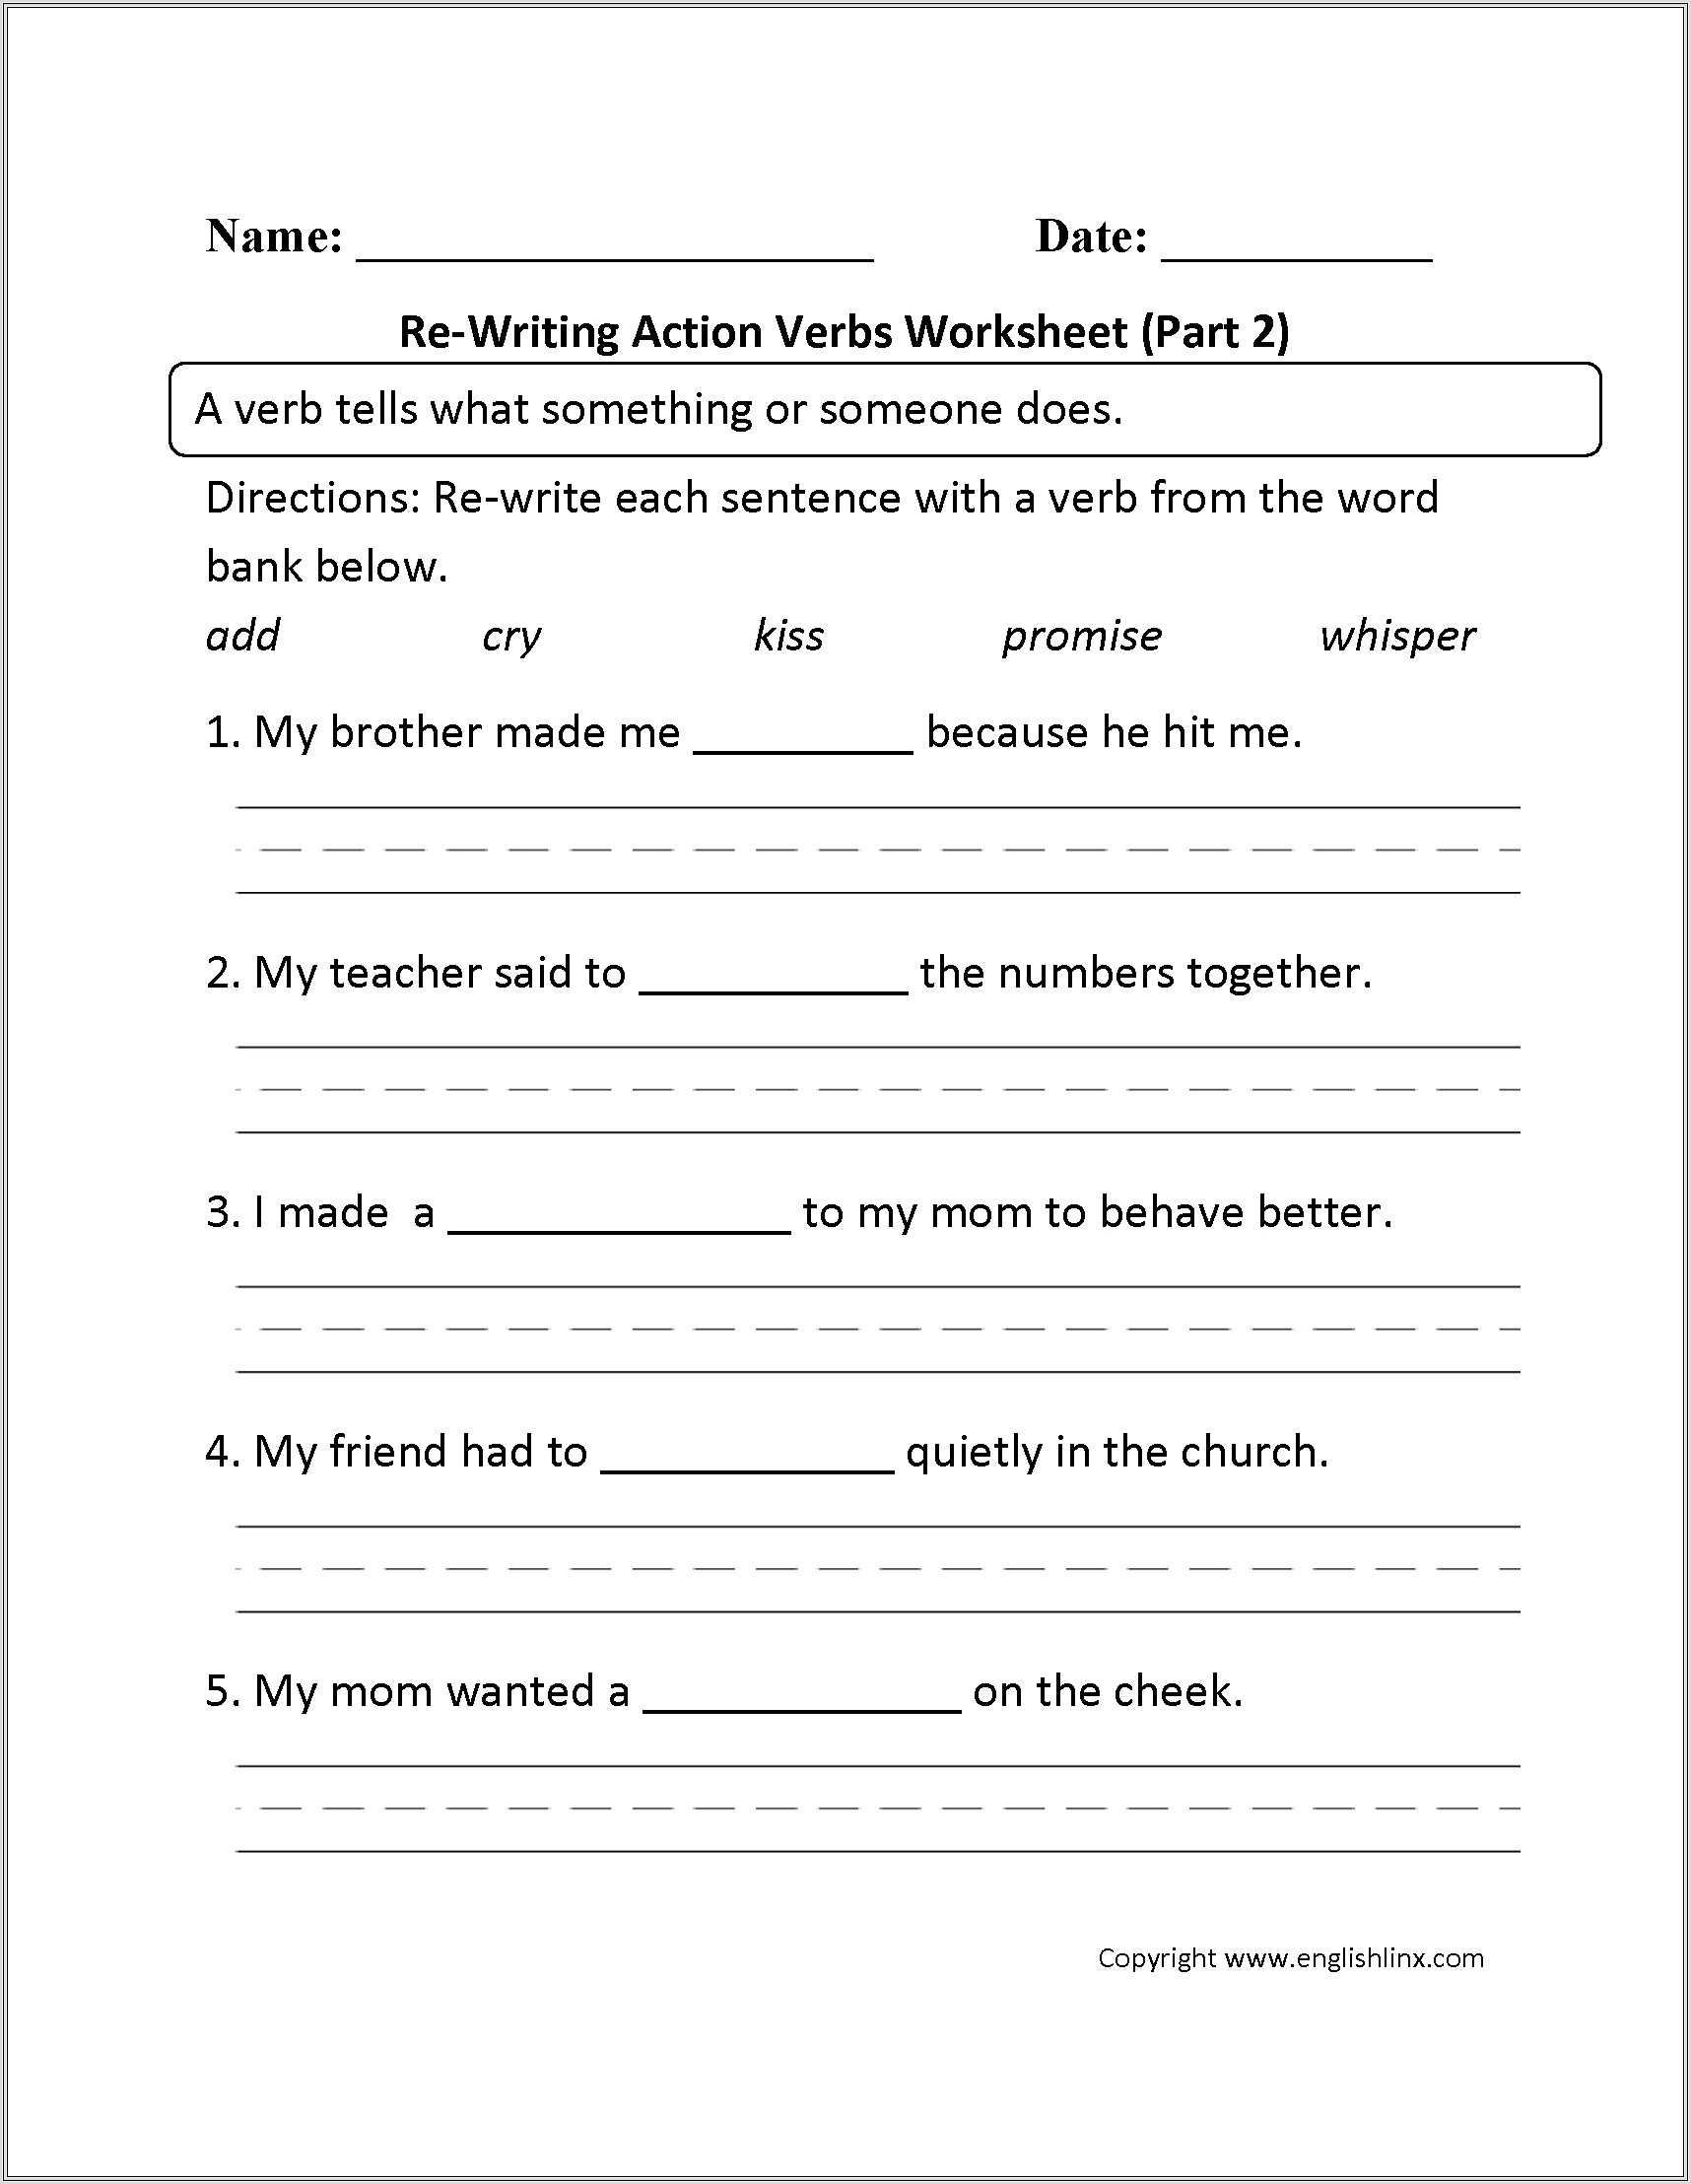 worksheets-for-grade-5-on-verbs-worksheet-restiumani-resume-qgynv6mpyg